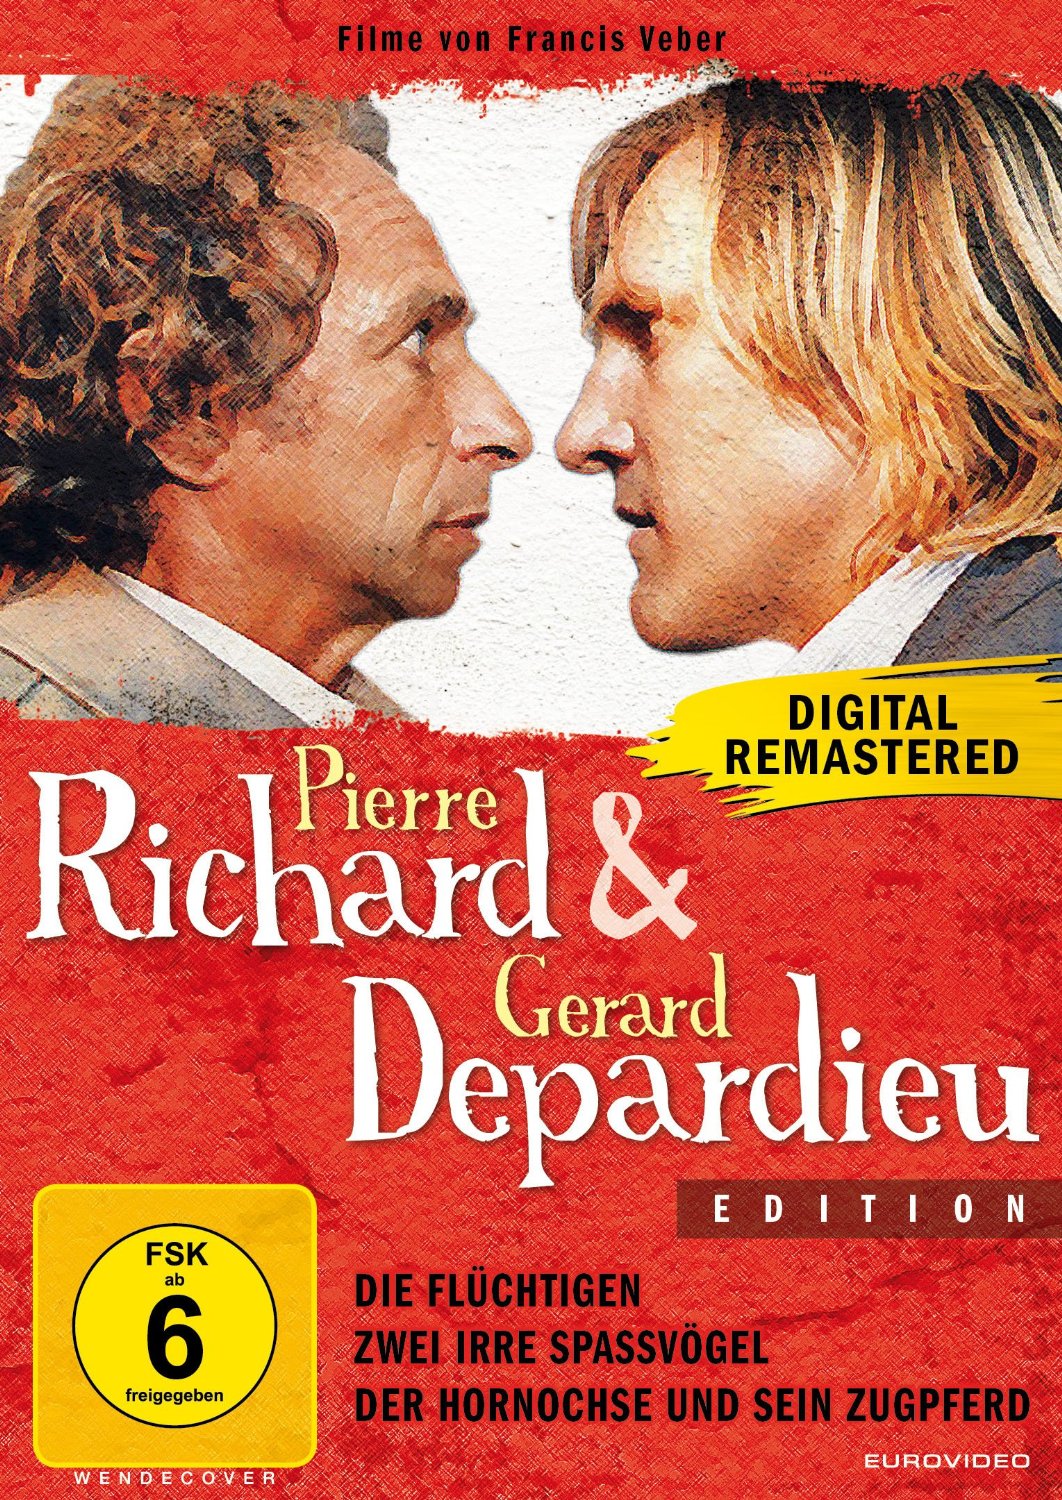 Pierre Richard & Gerard Depardieu Edition # 3-DVD-NEU